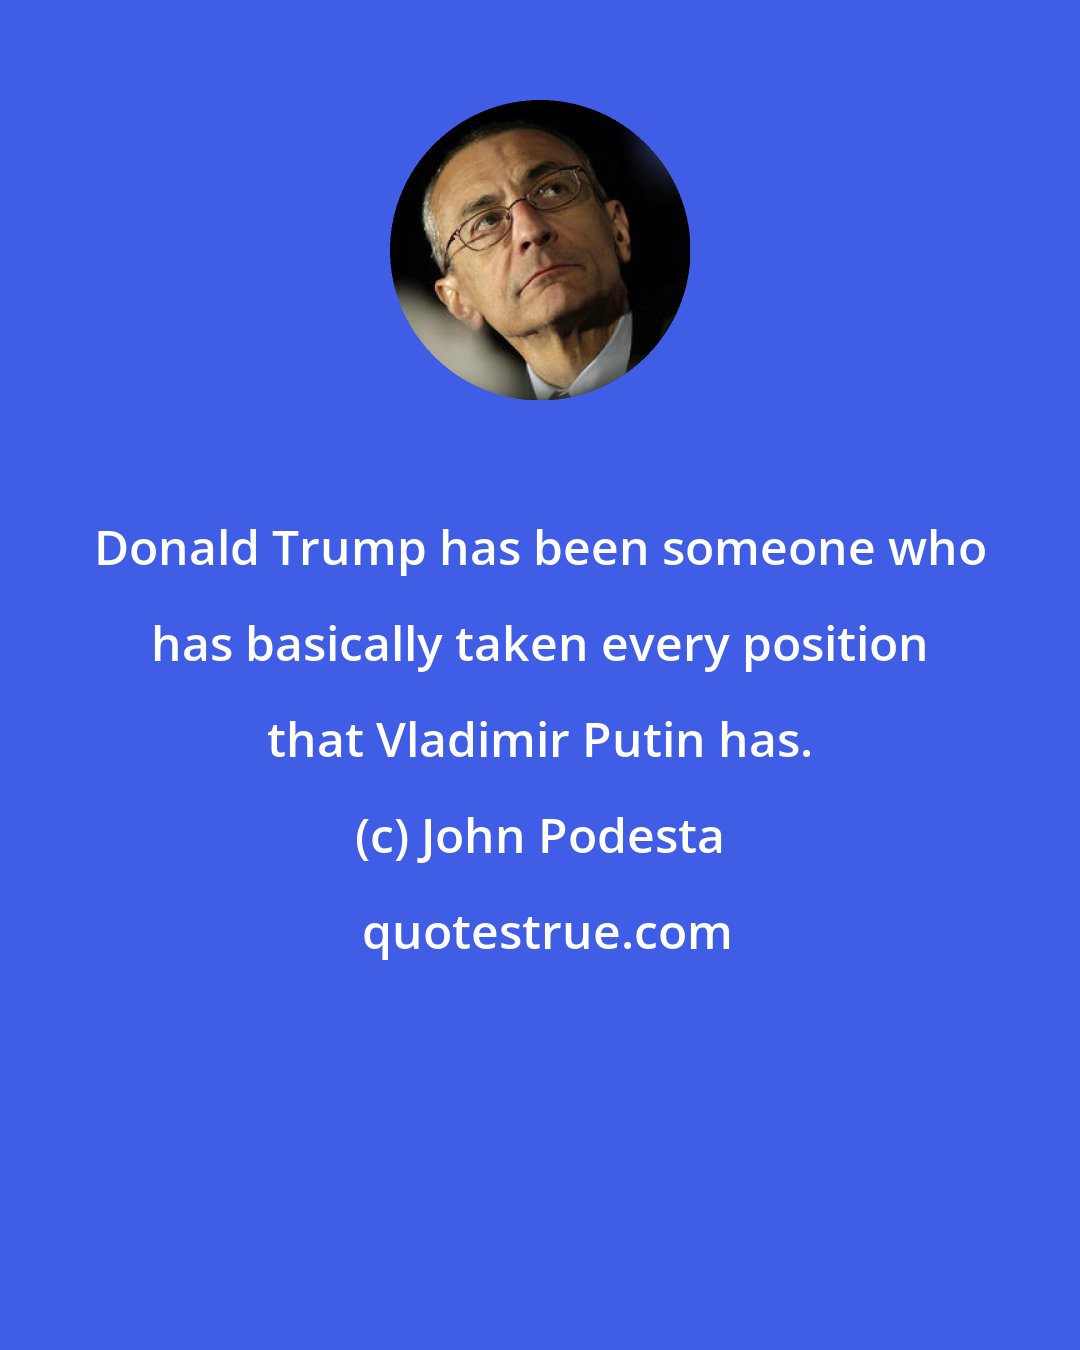 John Podesta: Donald Trump has been someone who has basically taken every position that Vladimir Putin has.